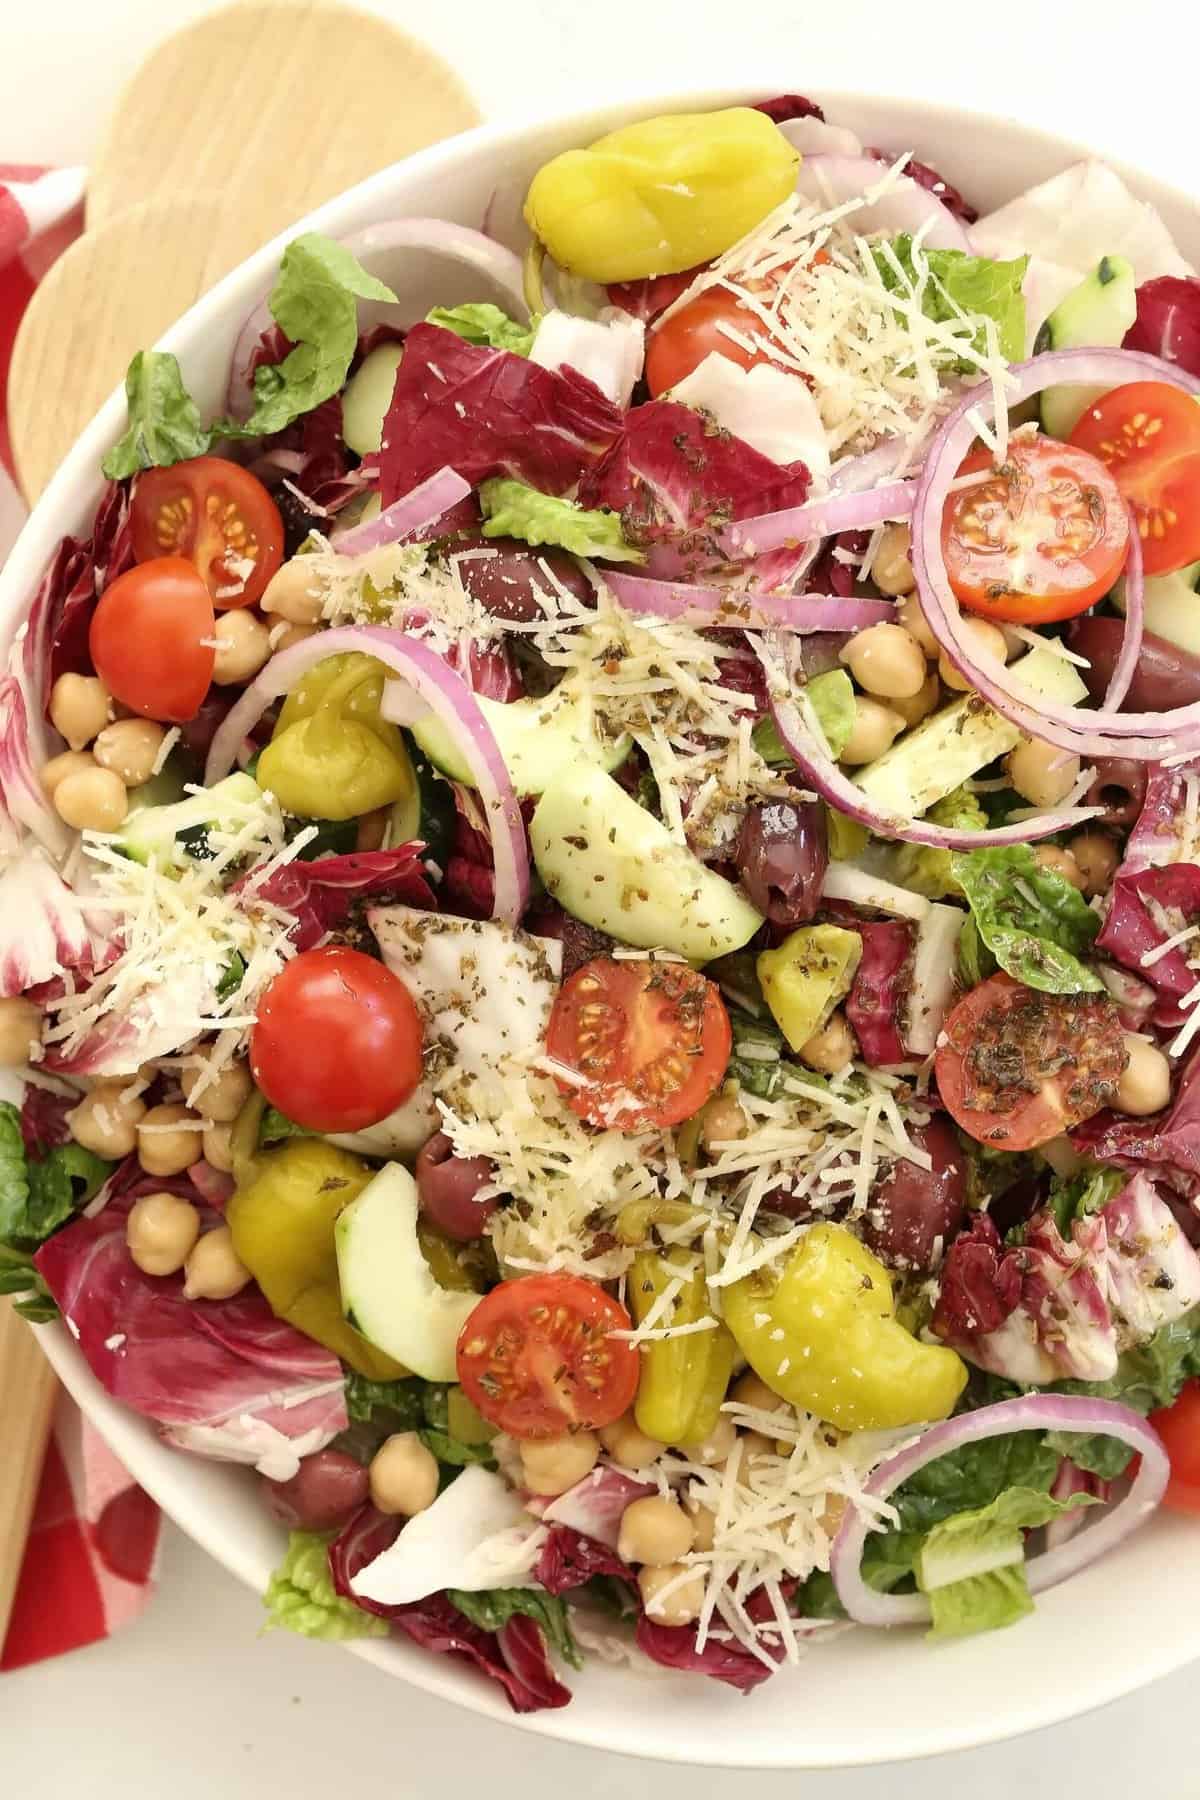 https://www.theharvestkitchen.com/wp-content/uploads/2021/05/italian-salad-ingredients-scaled.jpg